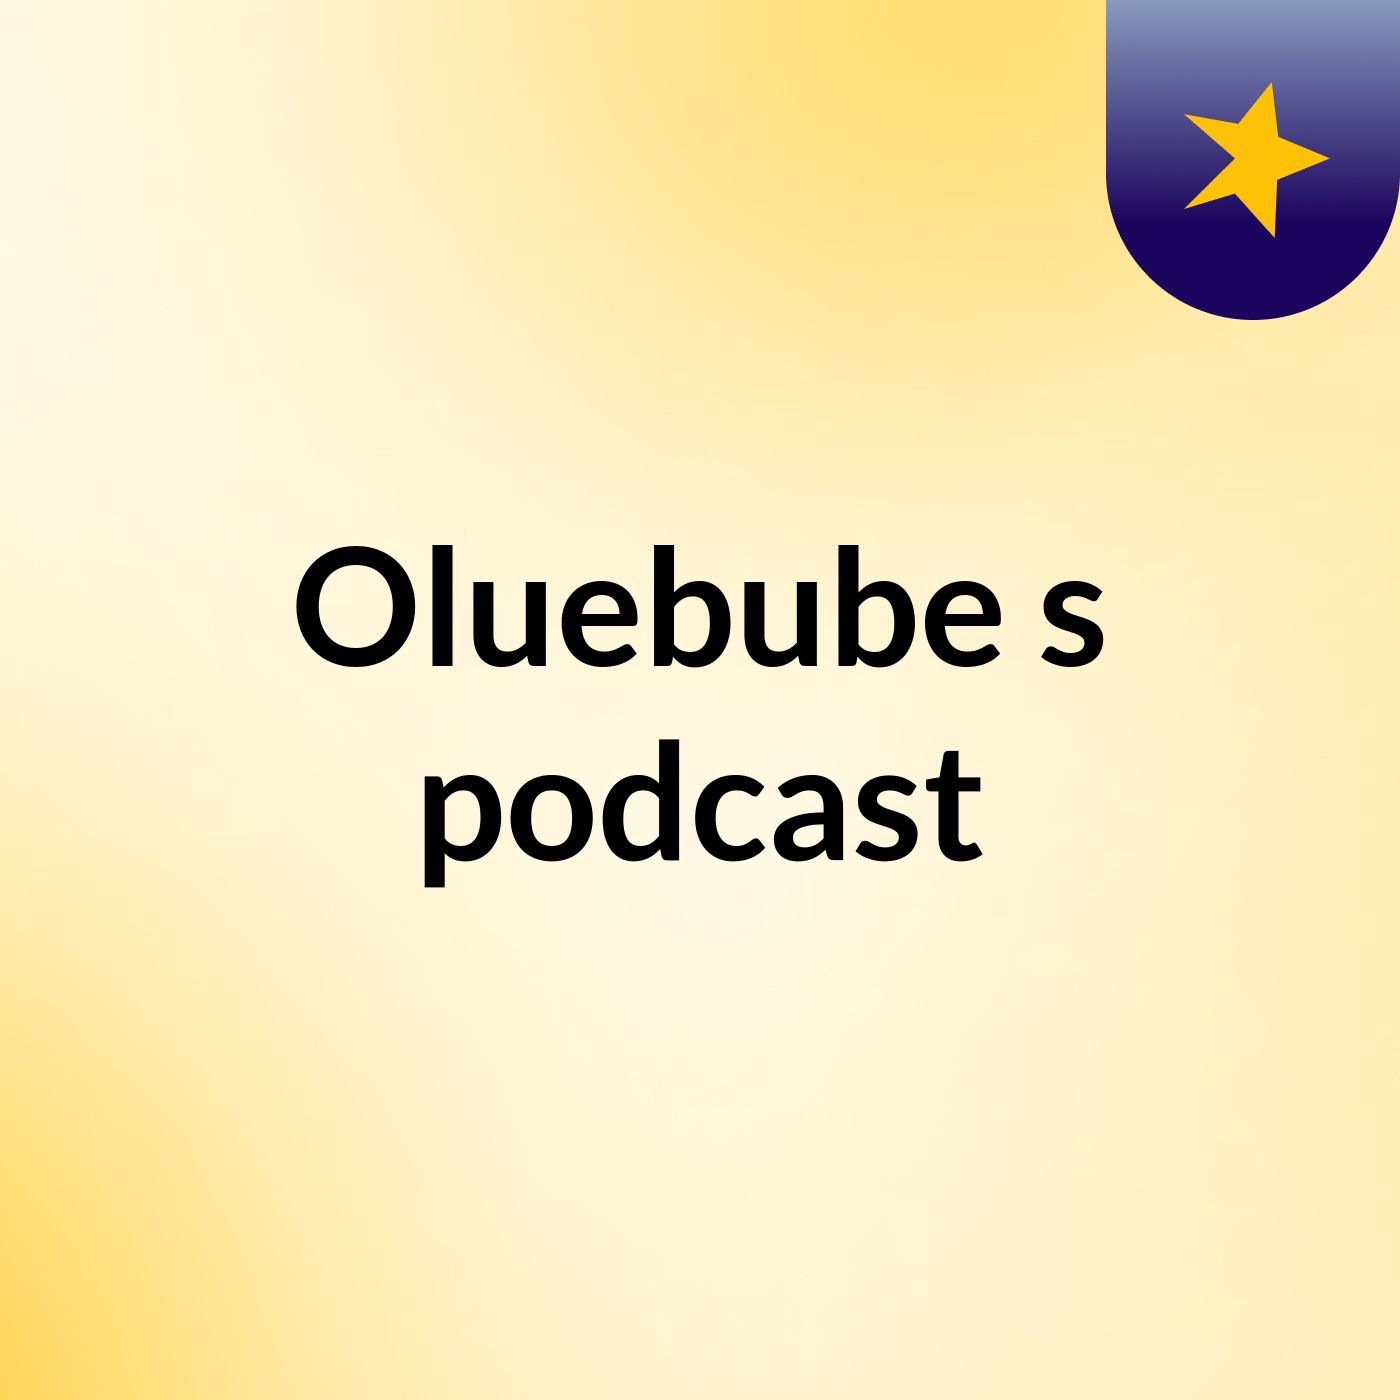 Episode 3 - Oluebube's podcast